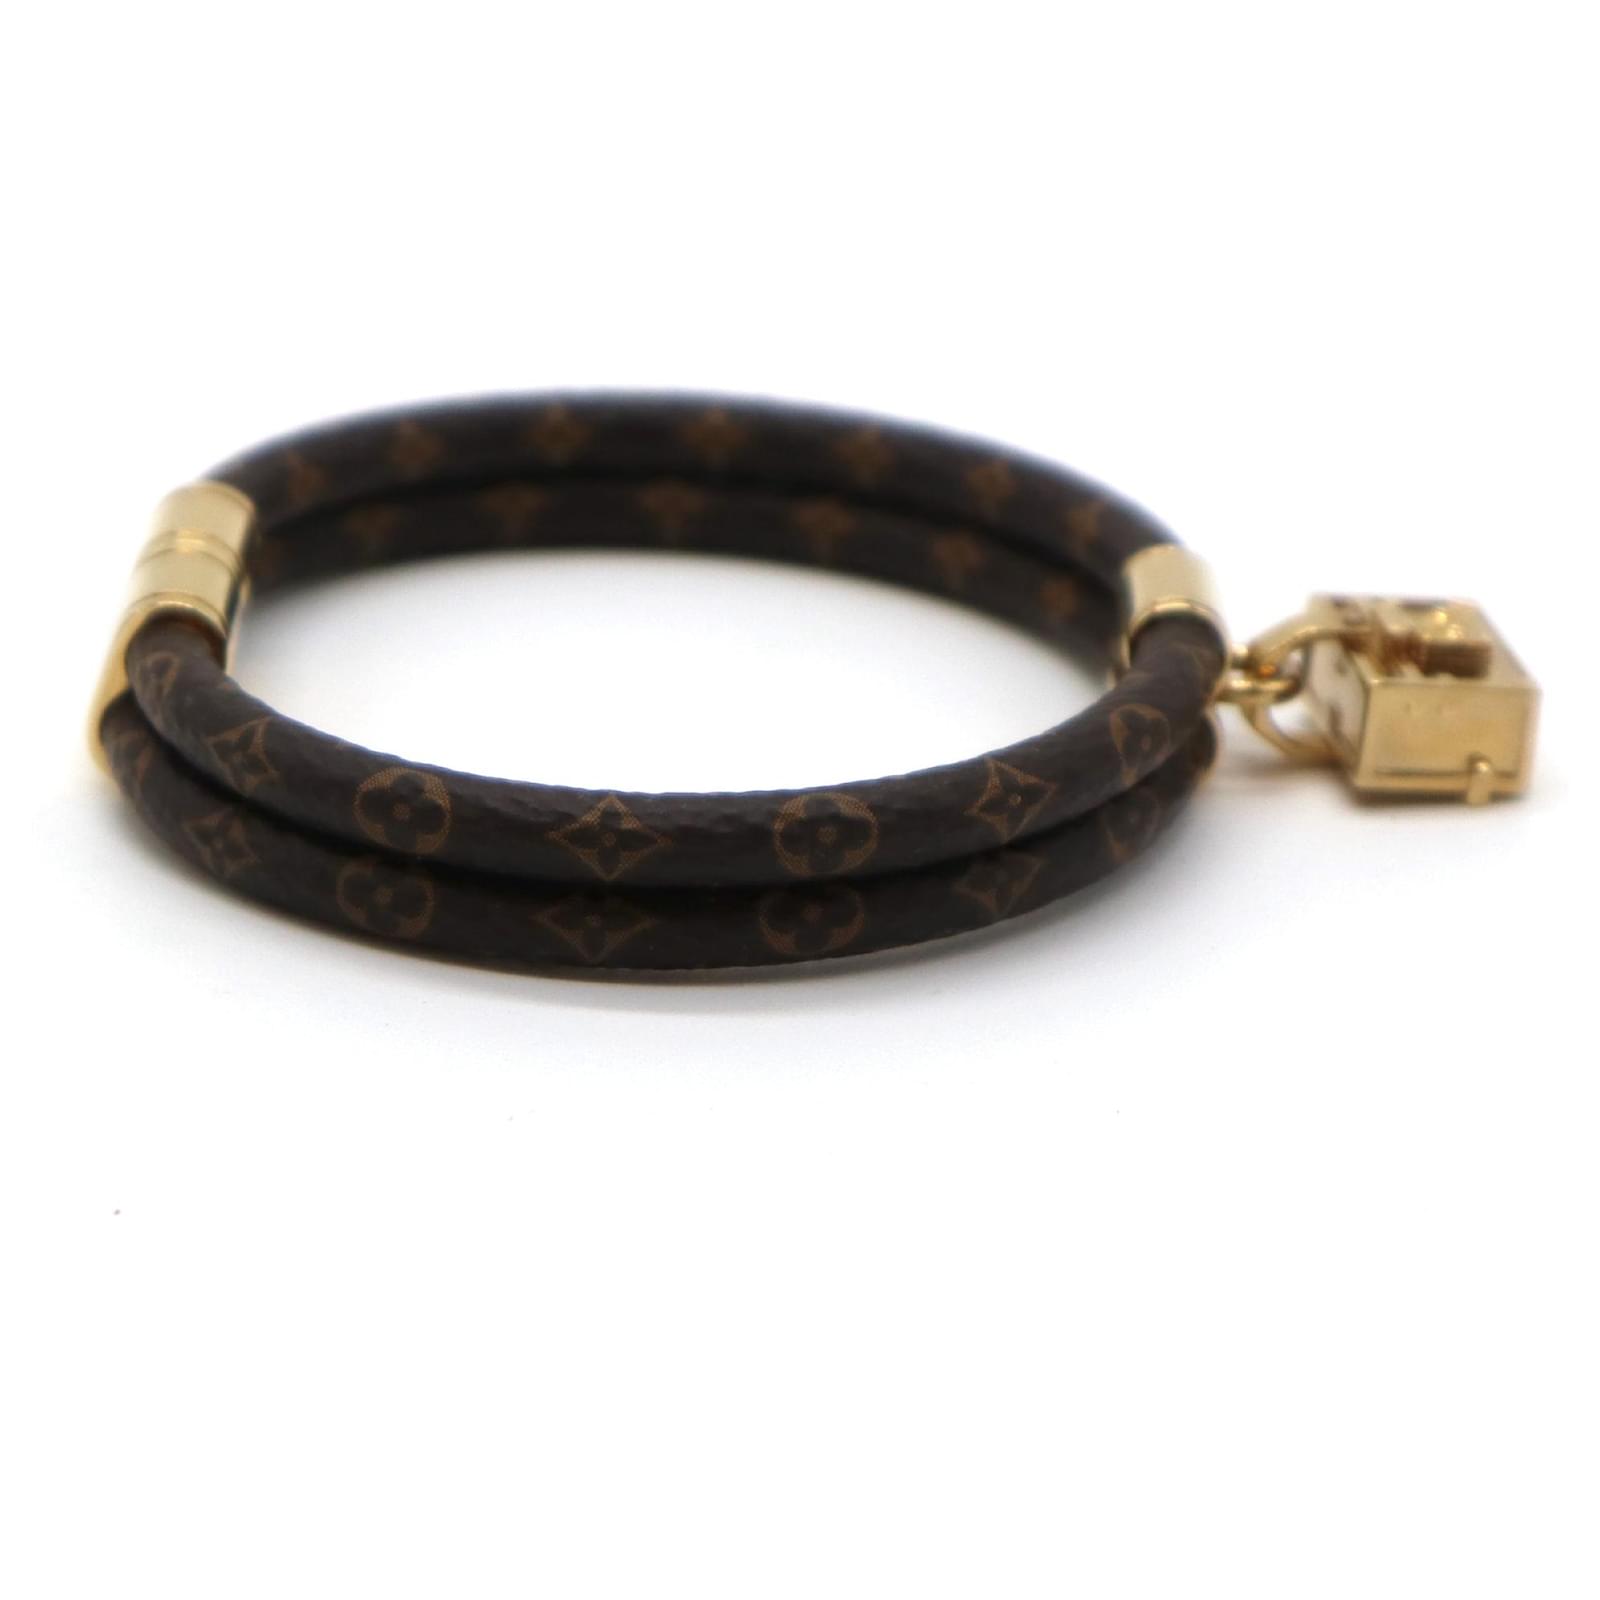 Louis Vuitton Leather Gold Trunk Cuff Bracelet